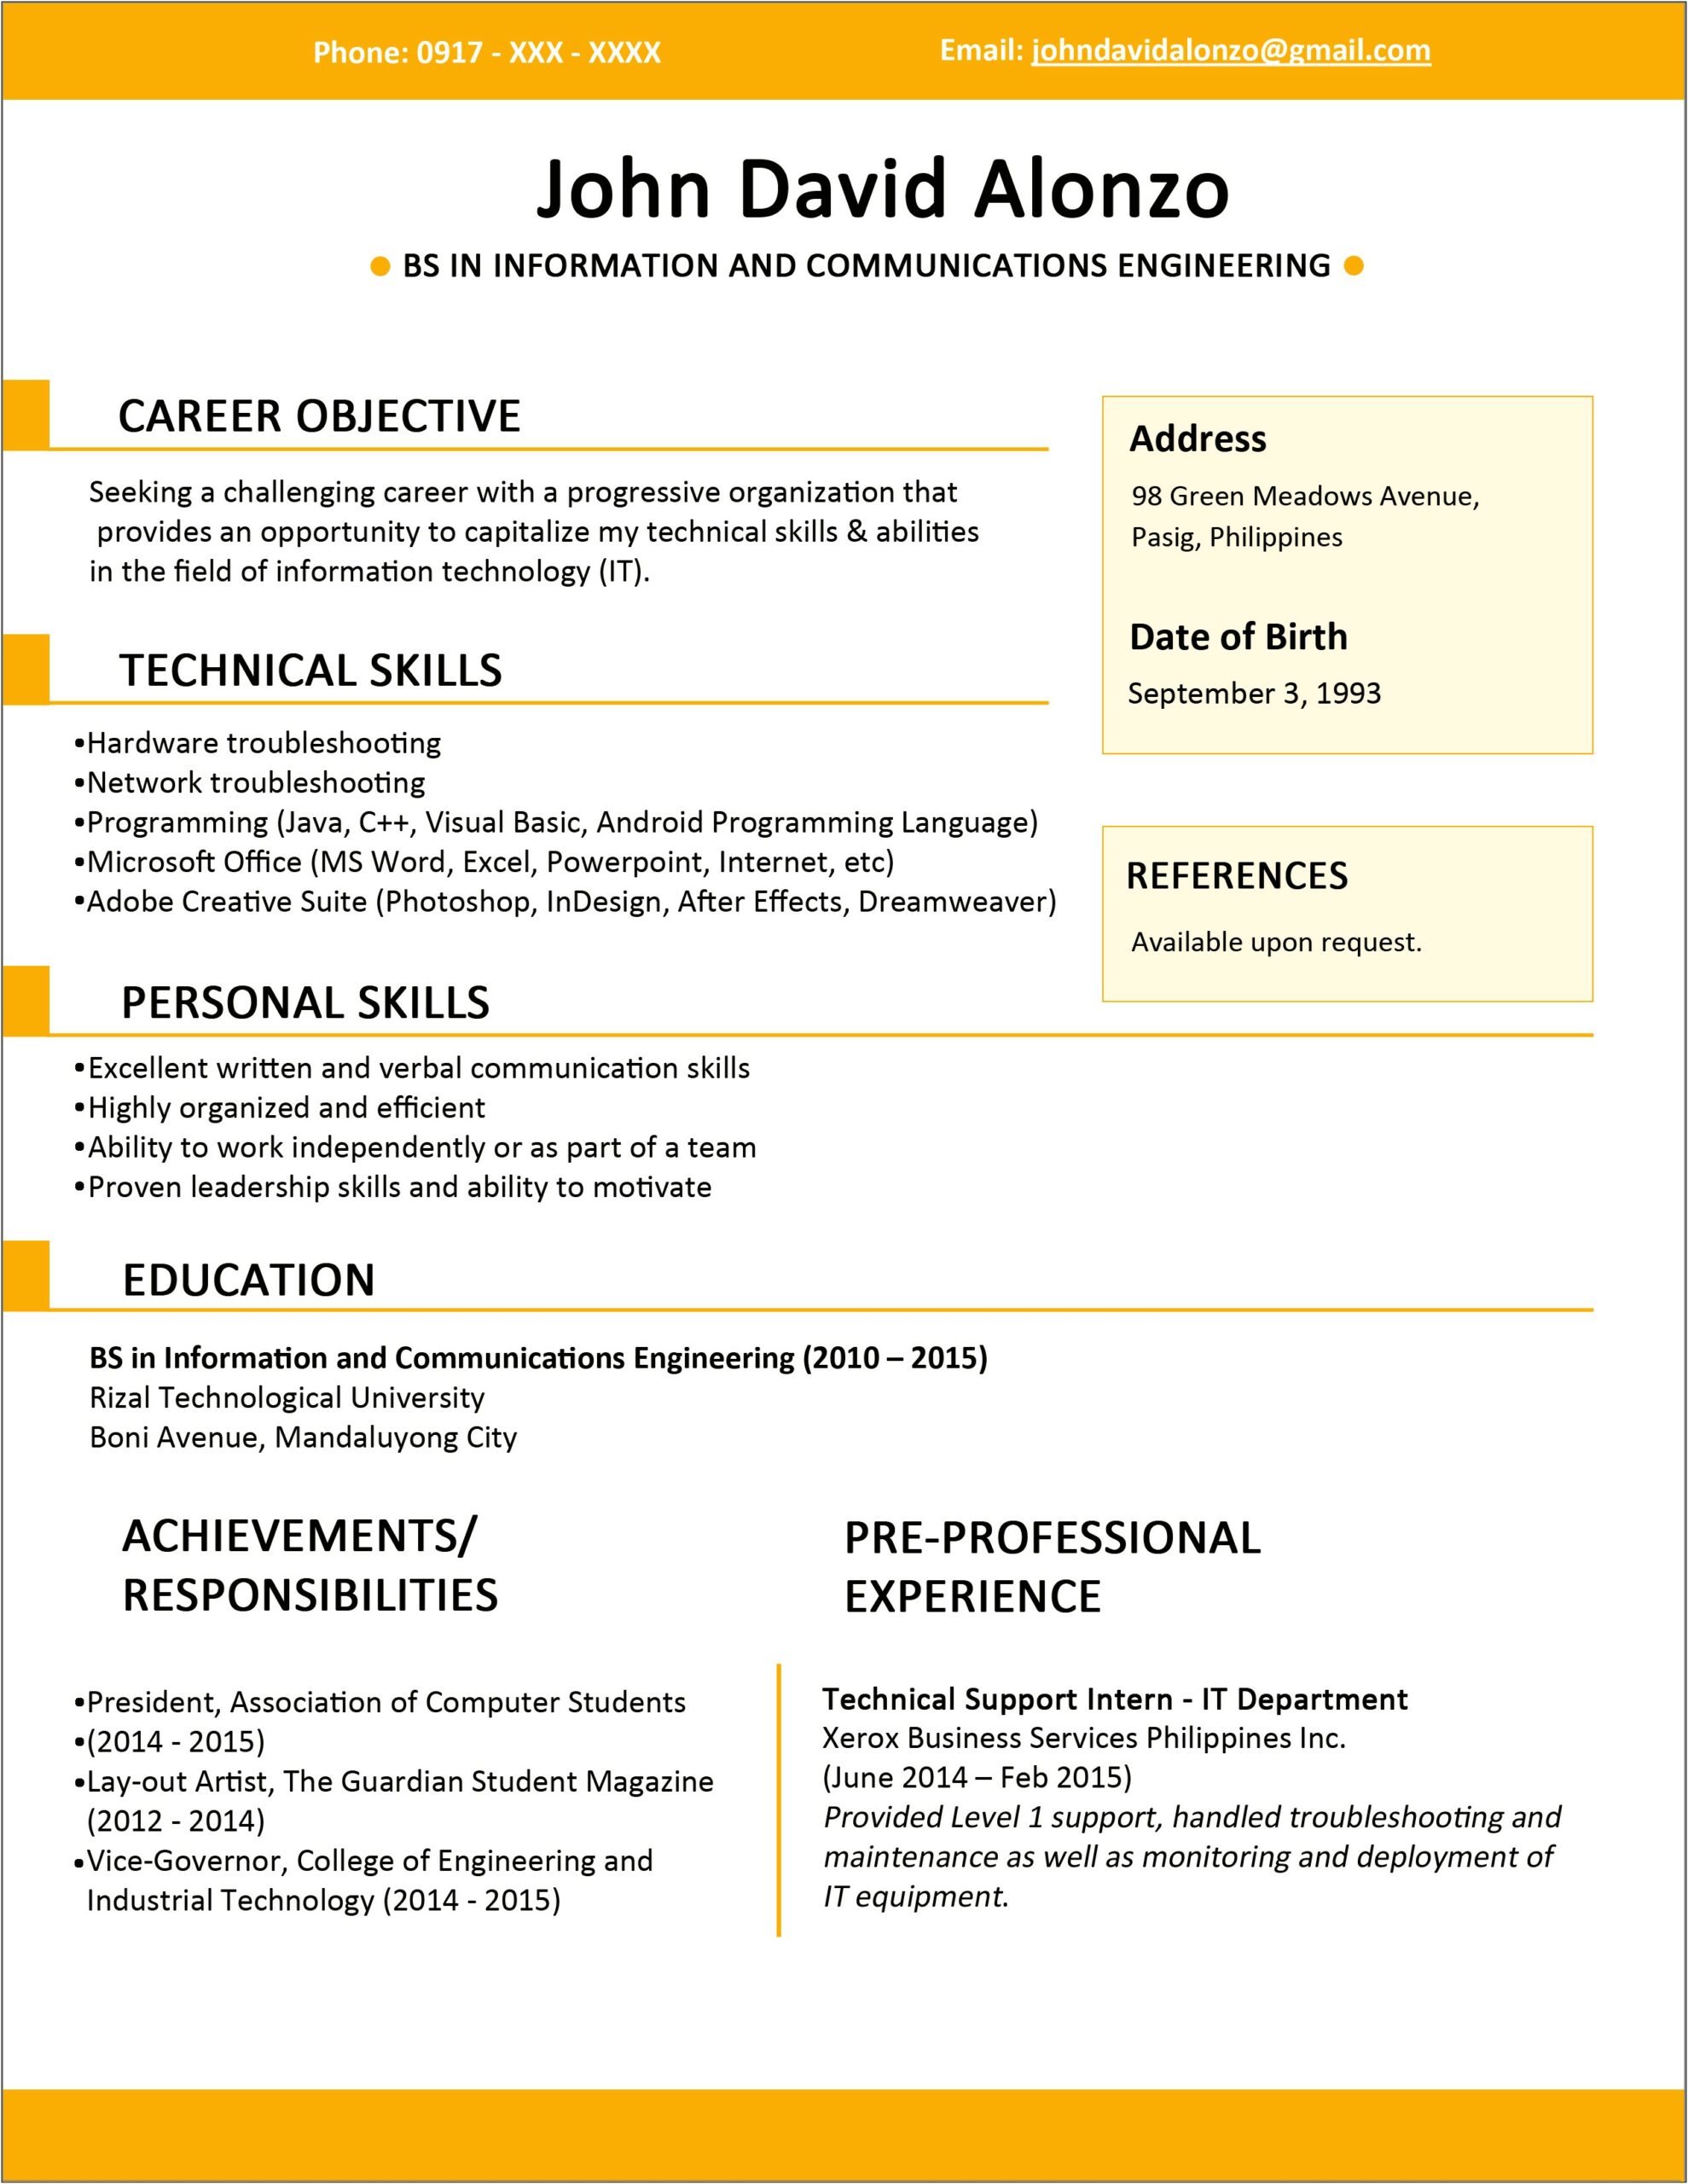 Standard Resume Format For Job